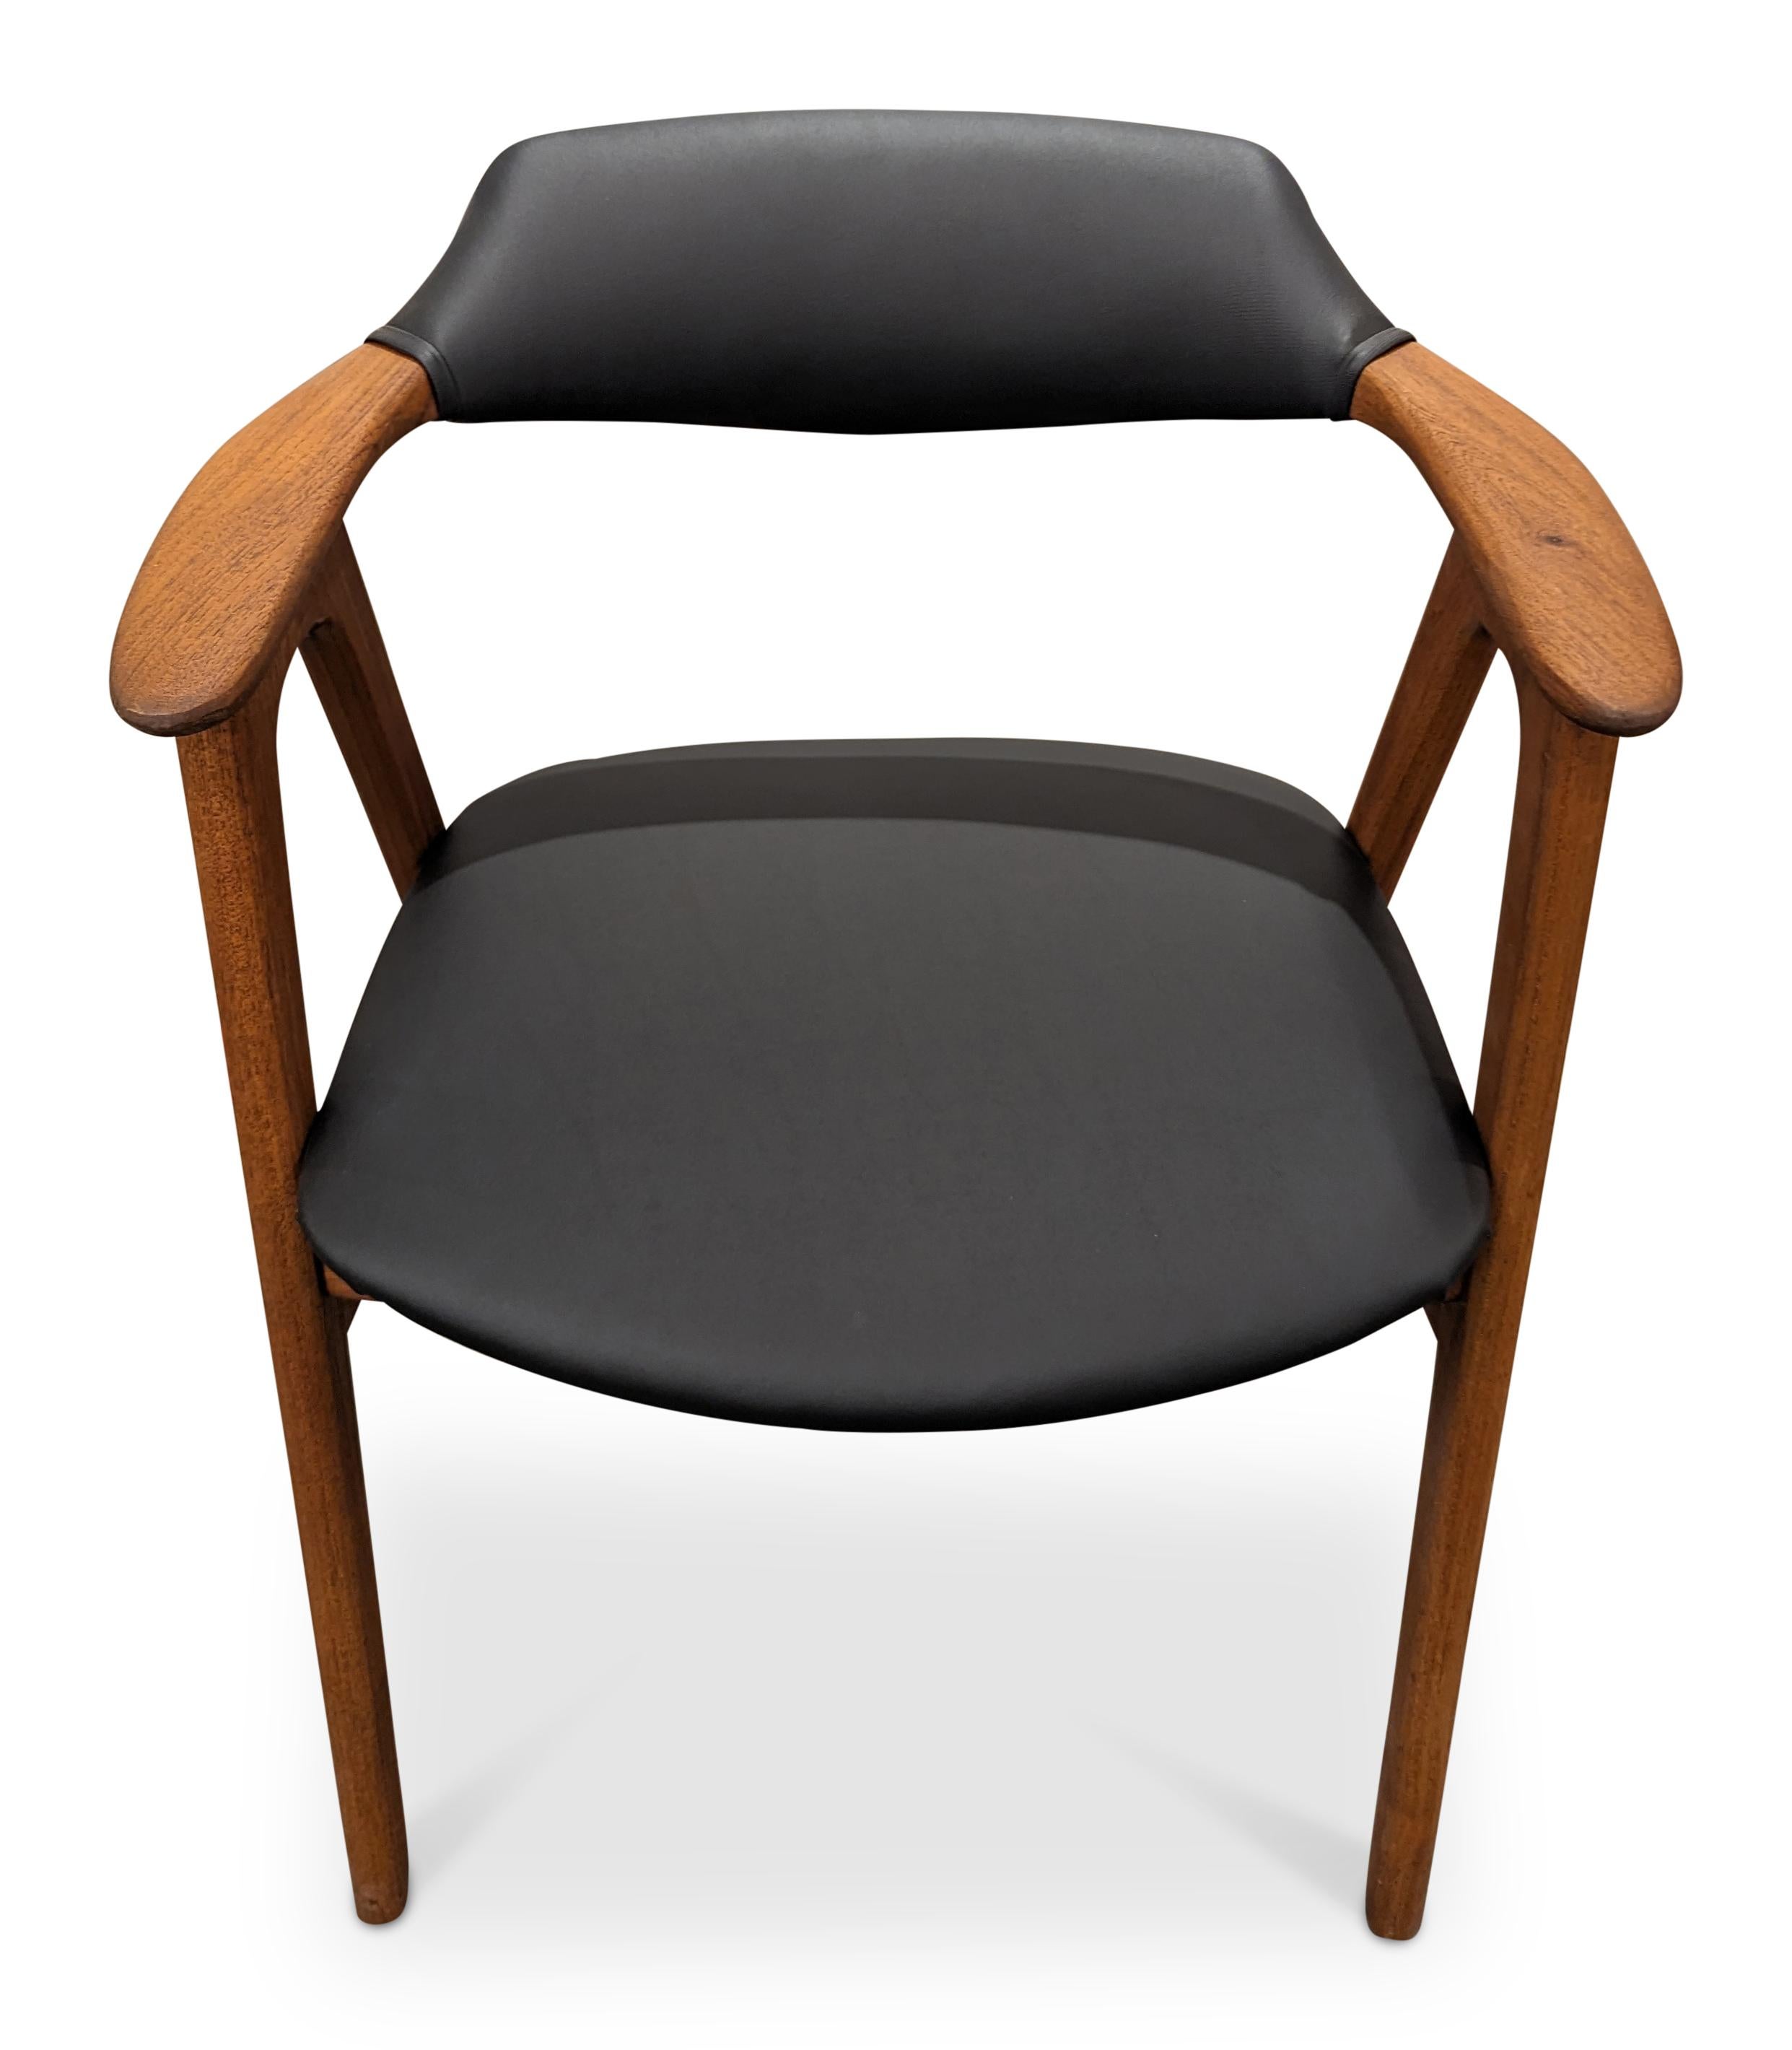  Vintage Danish Mid Century Erik Kirkegaard Arm Chair - 022430 For Sale 1